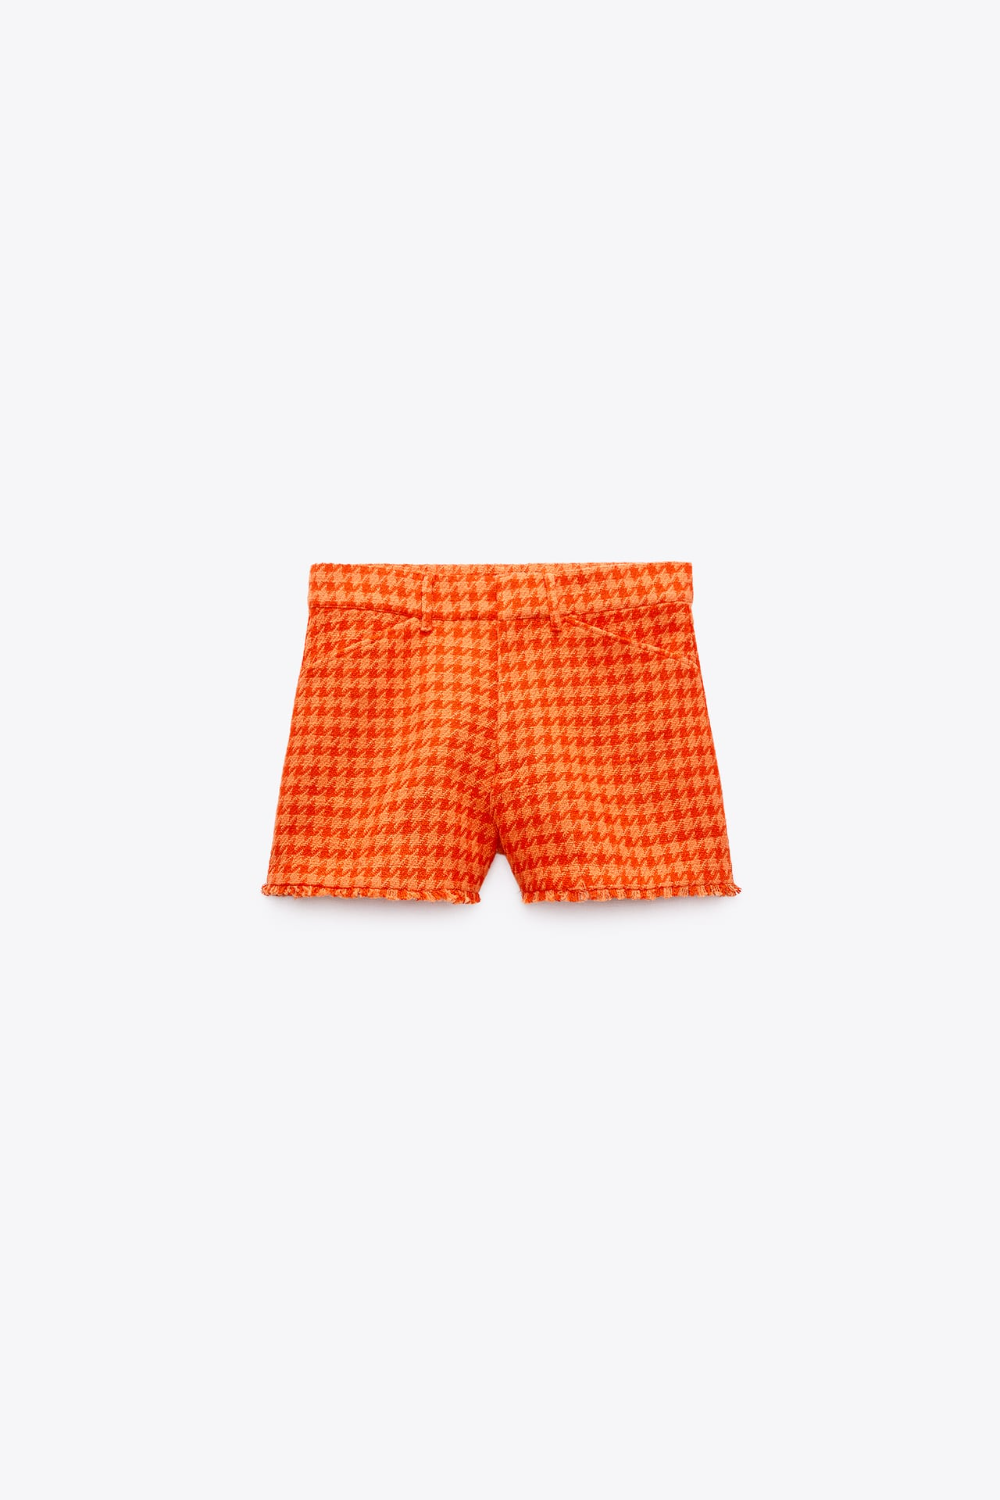 https://flyfiercefab.com/wp-content/uploads/2022/03/Zara-orange-houndtooth-tweed-shorts.png